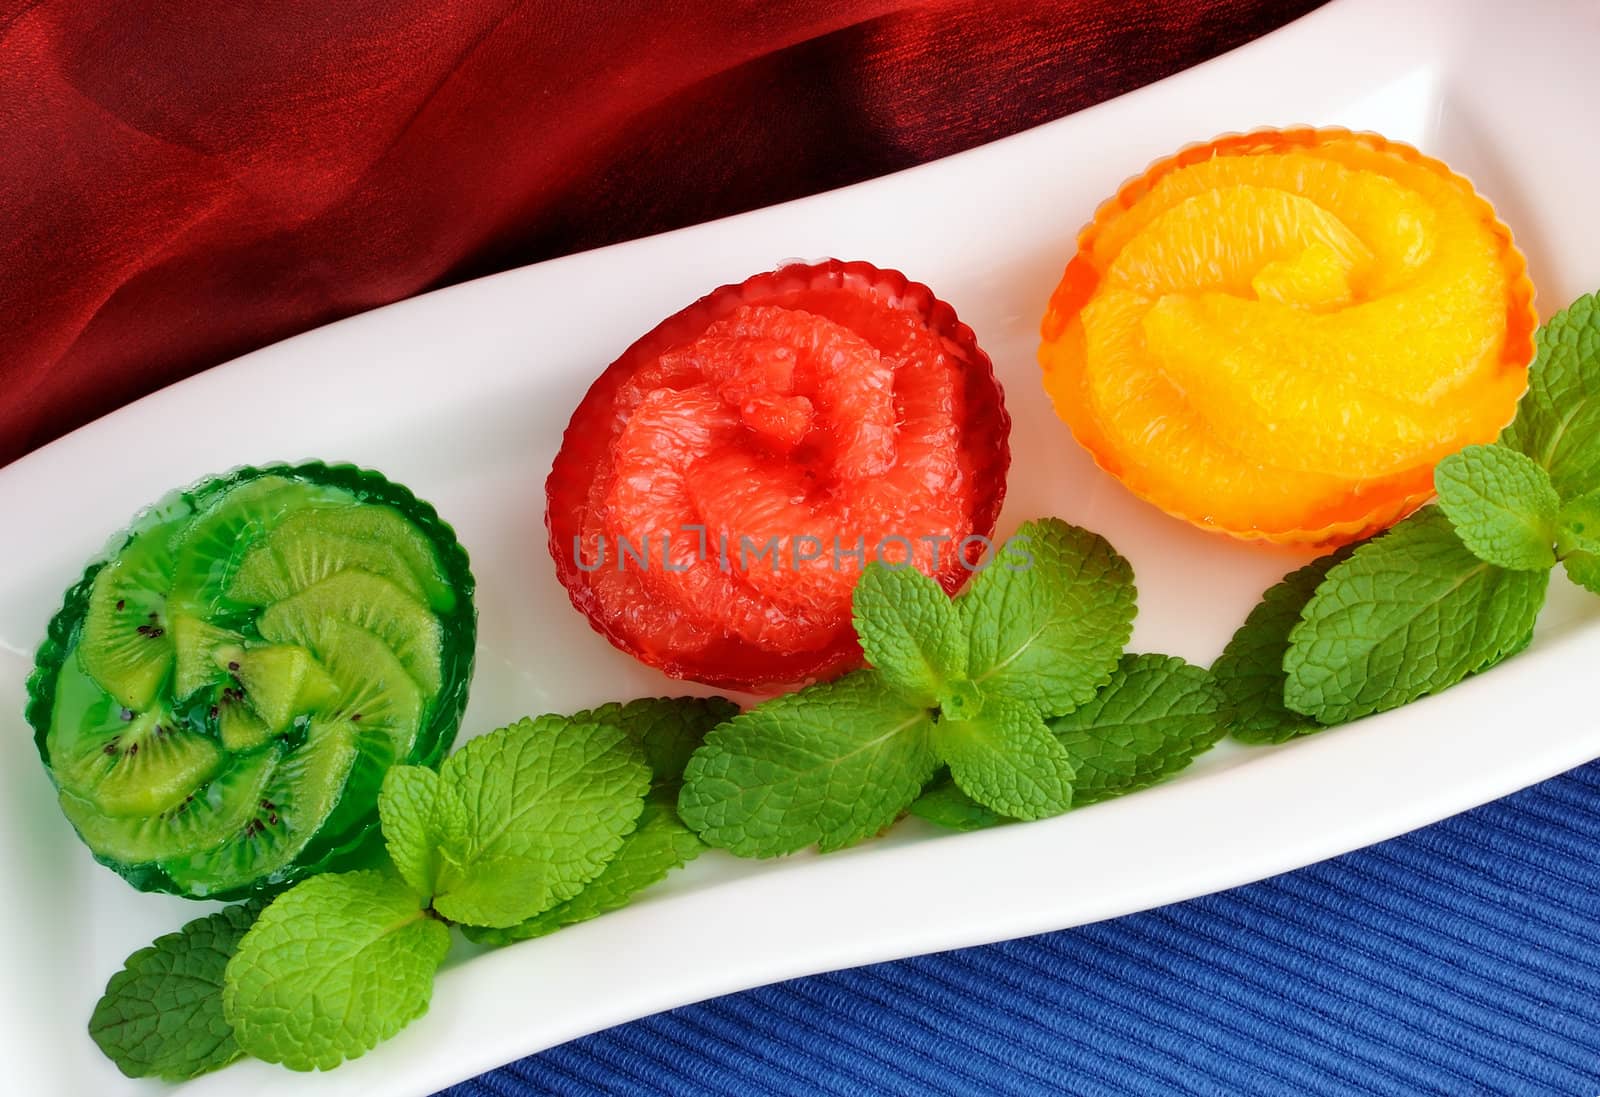 Jelly dessert of fresh fruit (oranges, grapefruit, kiwi) with mint